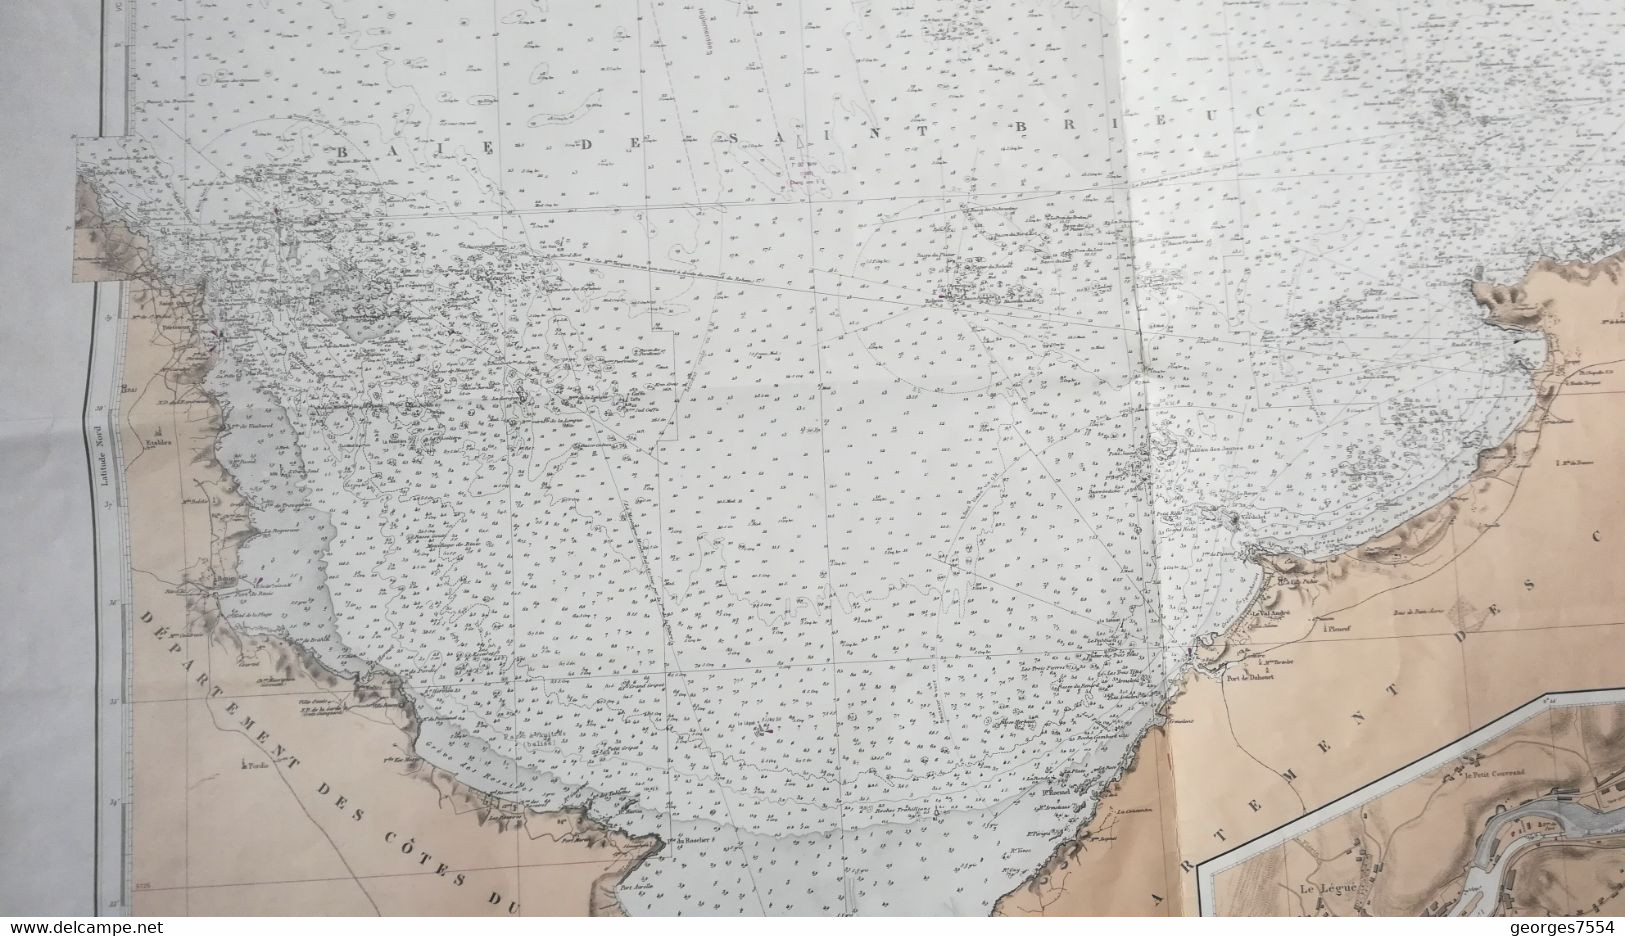 DE PORTRIEUX AU CAP FREHEL  Grande Carte Marine De Mr. BEAUTEMPS-BEAUPRE 75 X 106 Cm. - 1/10 000 - Zeekaarten